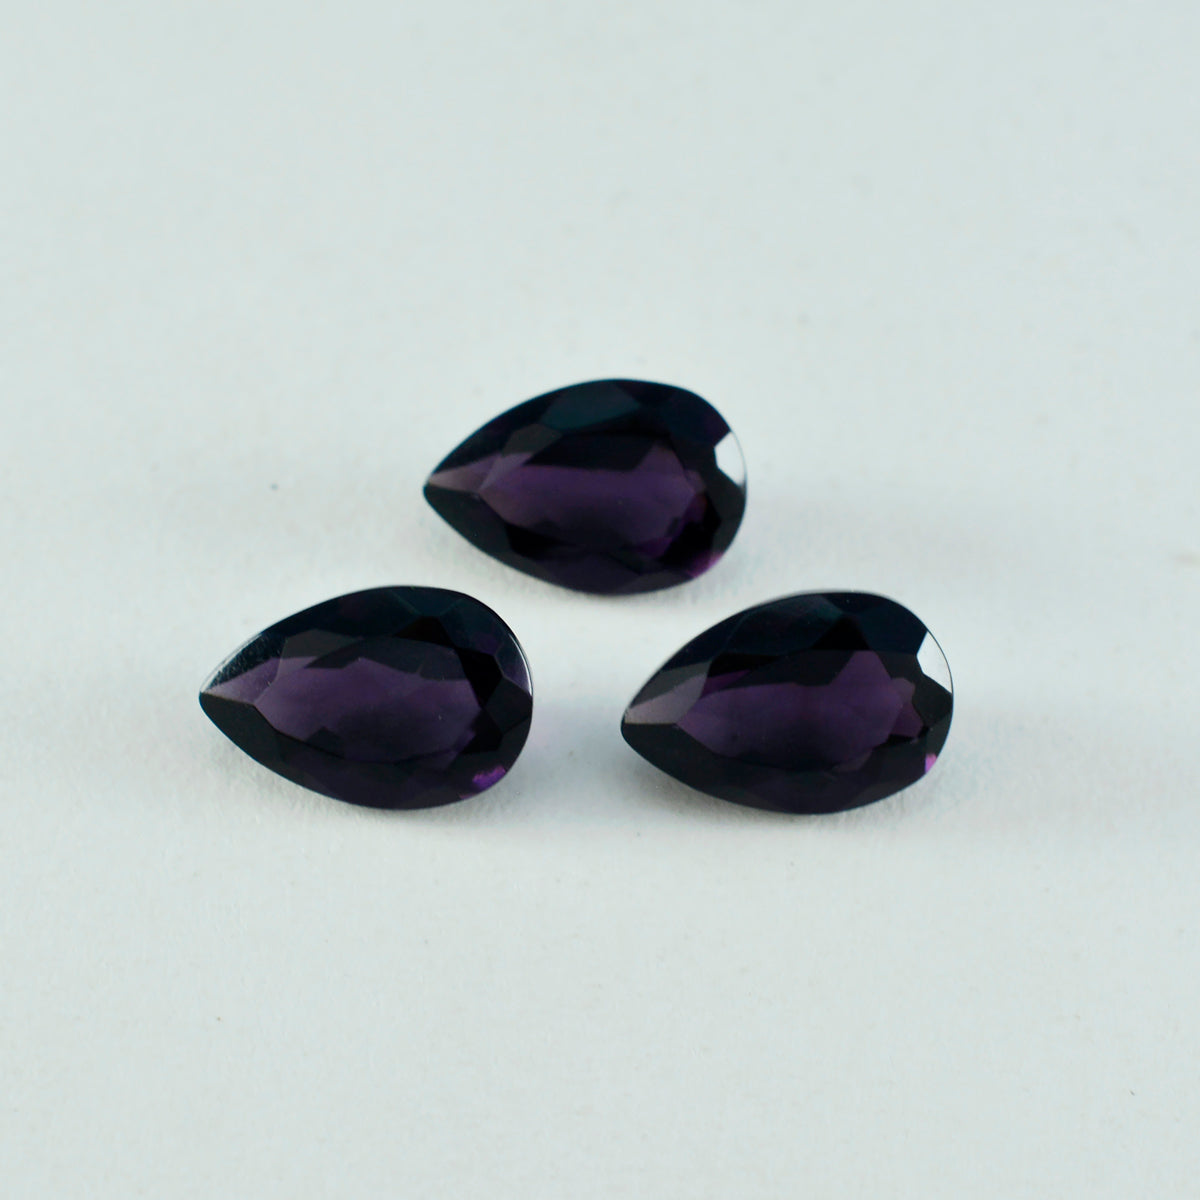 Riyogems 1PC Purple Amethyst CZ Faceted 7x10 mm Pear Shape AAA Quality Loose Gem